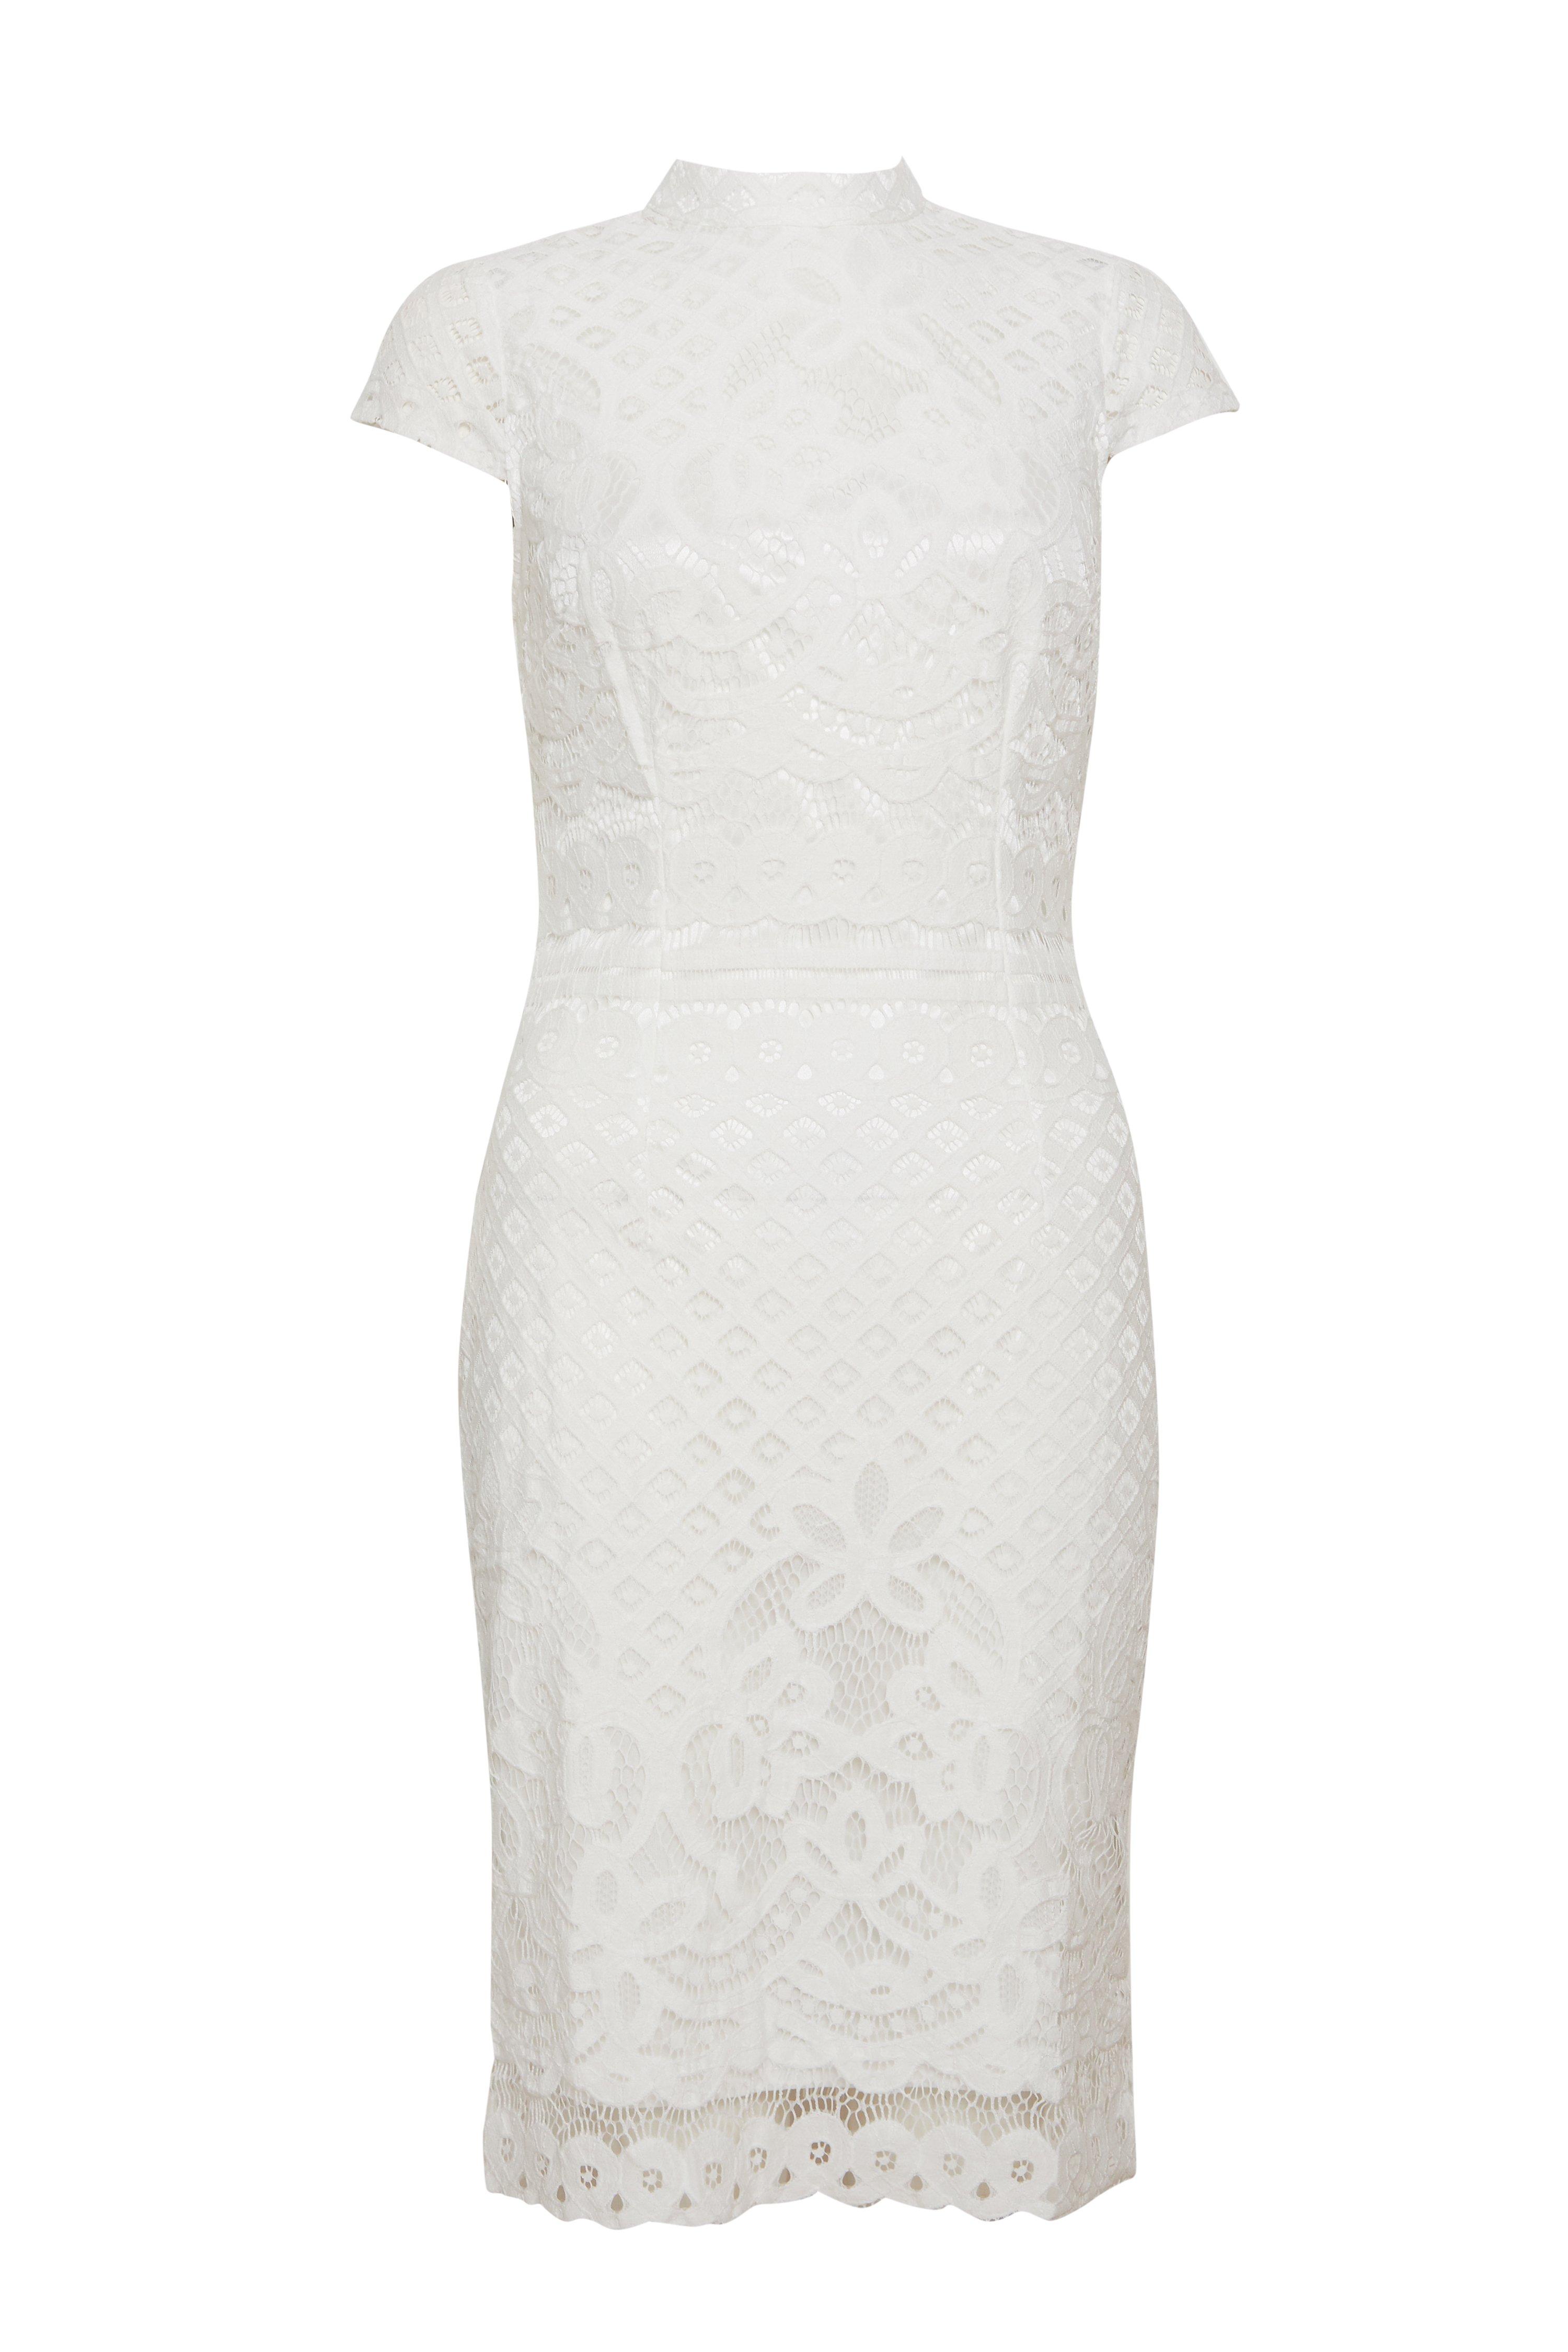 White Lace High Neck Midi Dress - Quiz Clothing